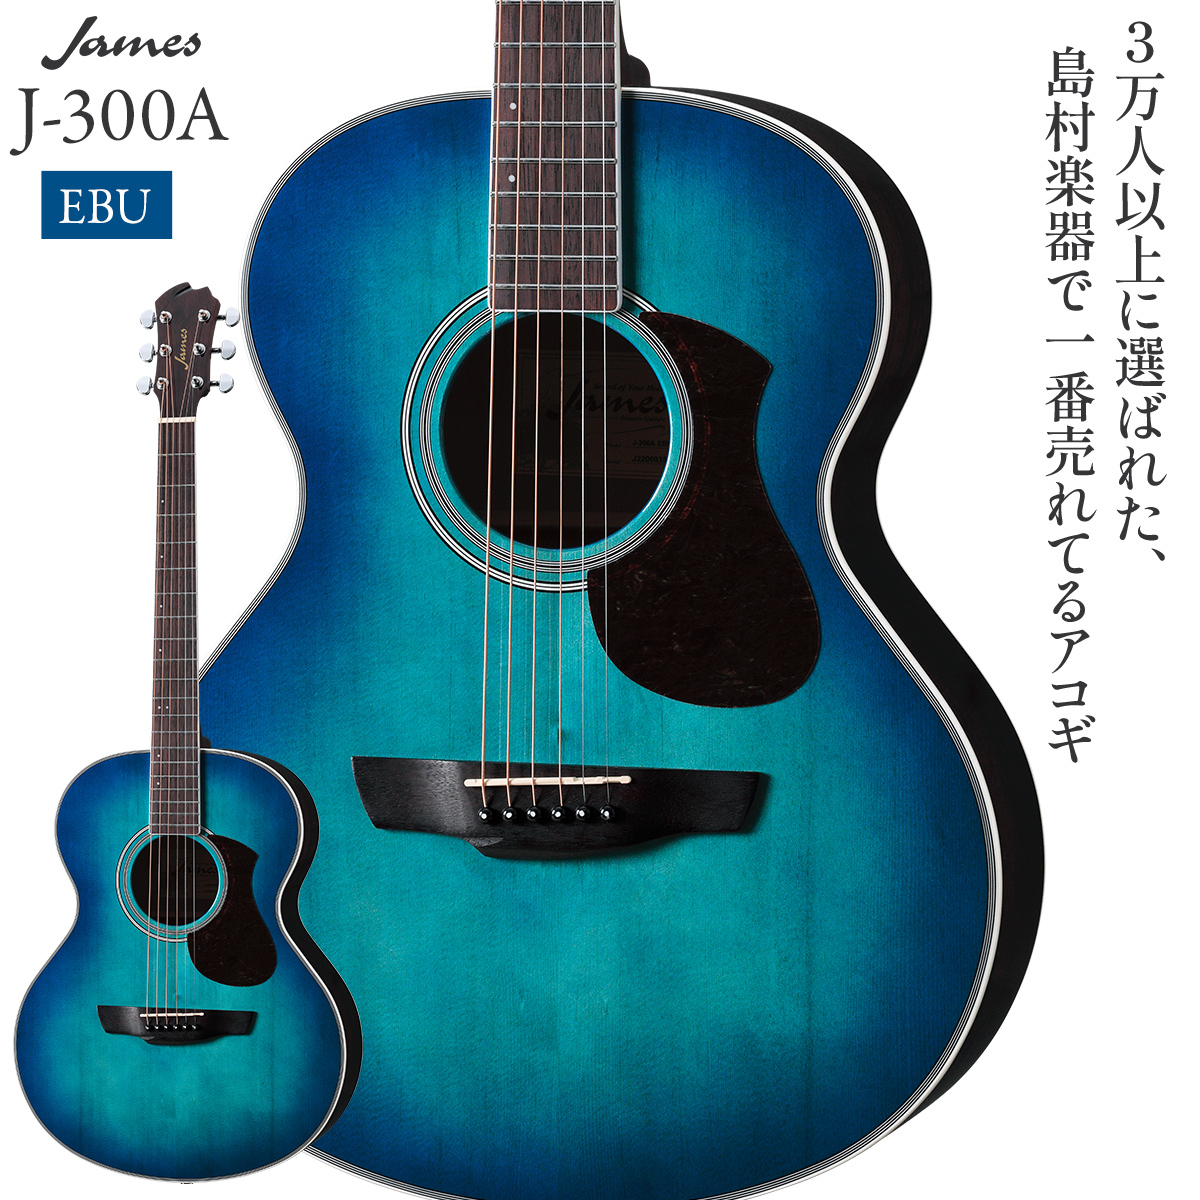 【6111】 James j-300a 青 弦交換不要 アコースティックギター